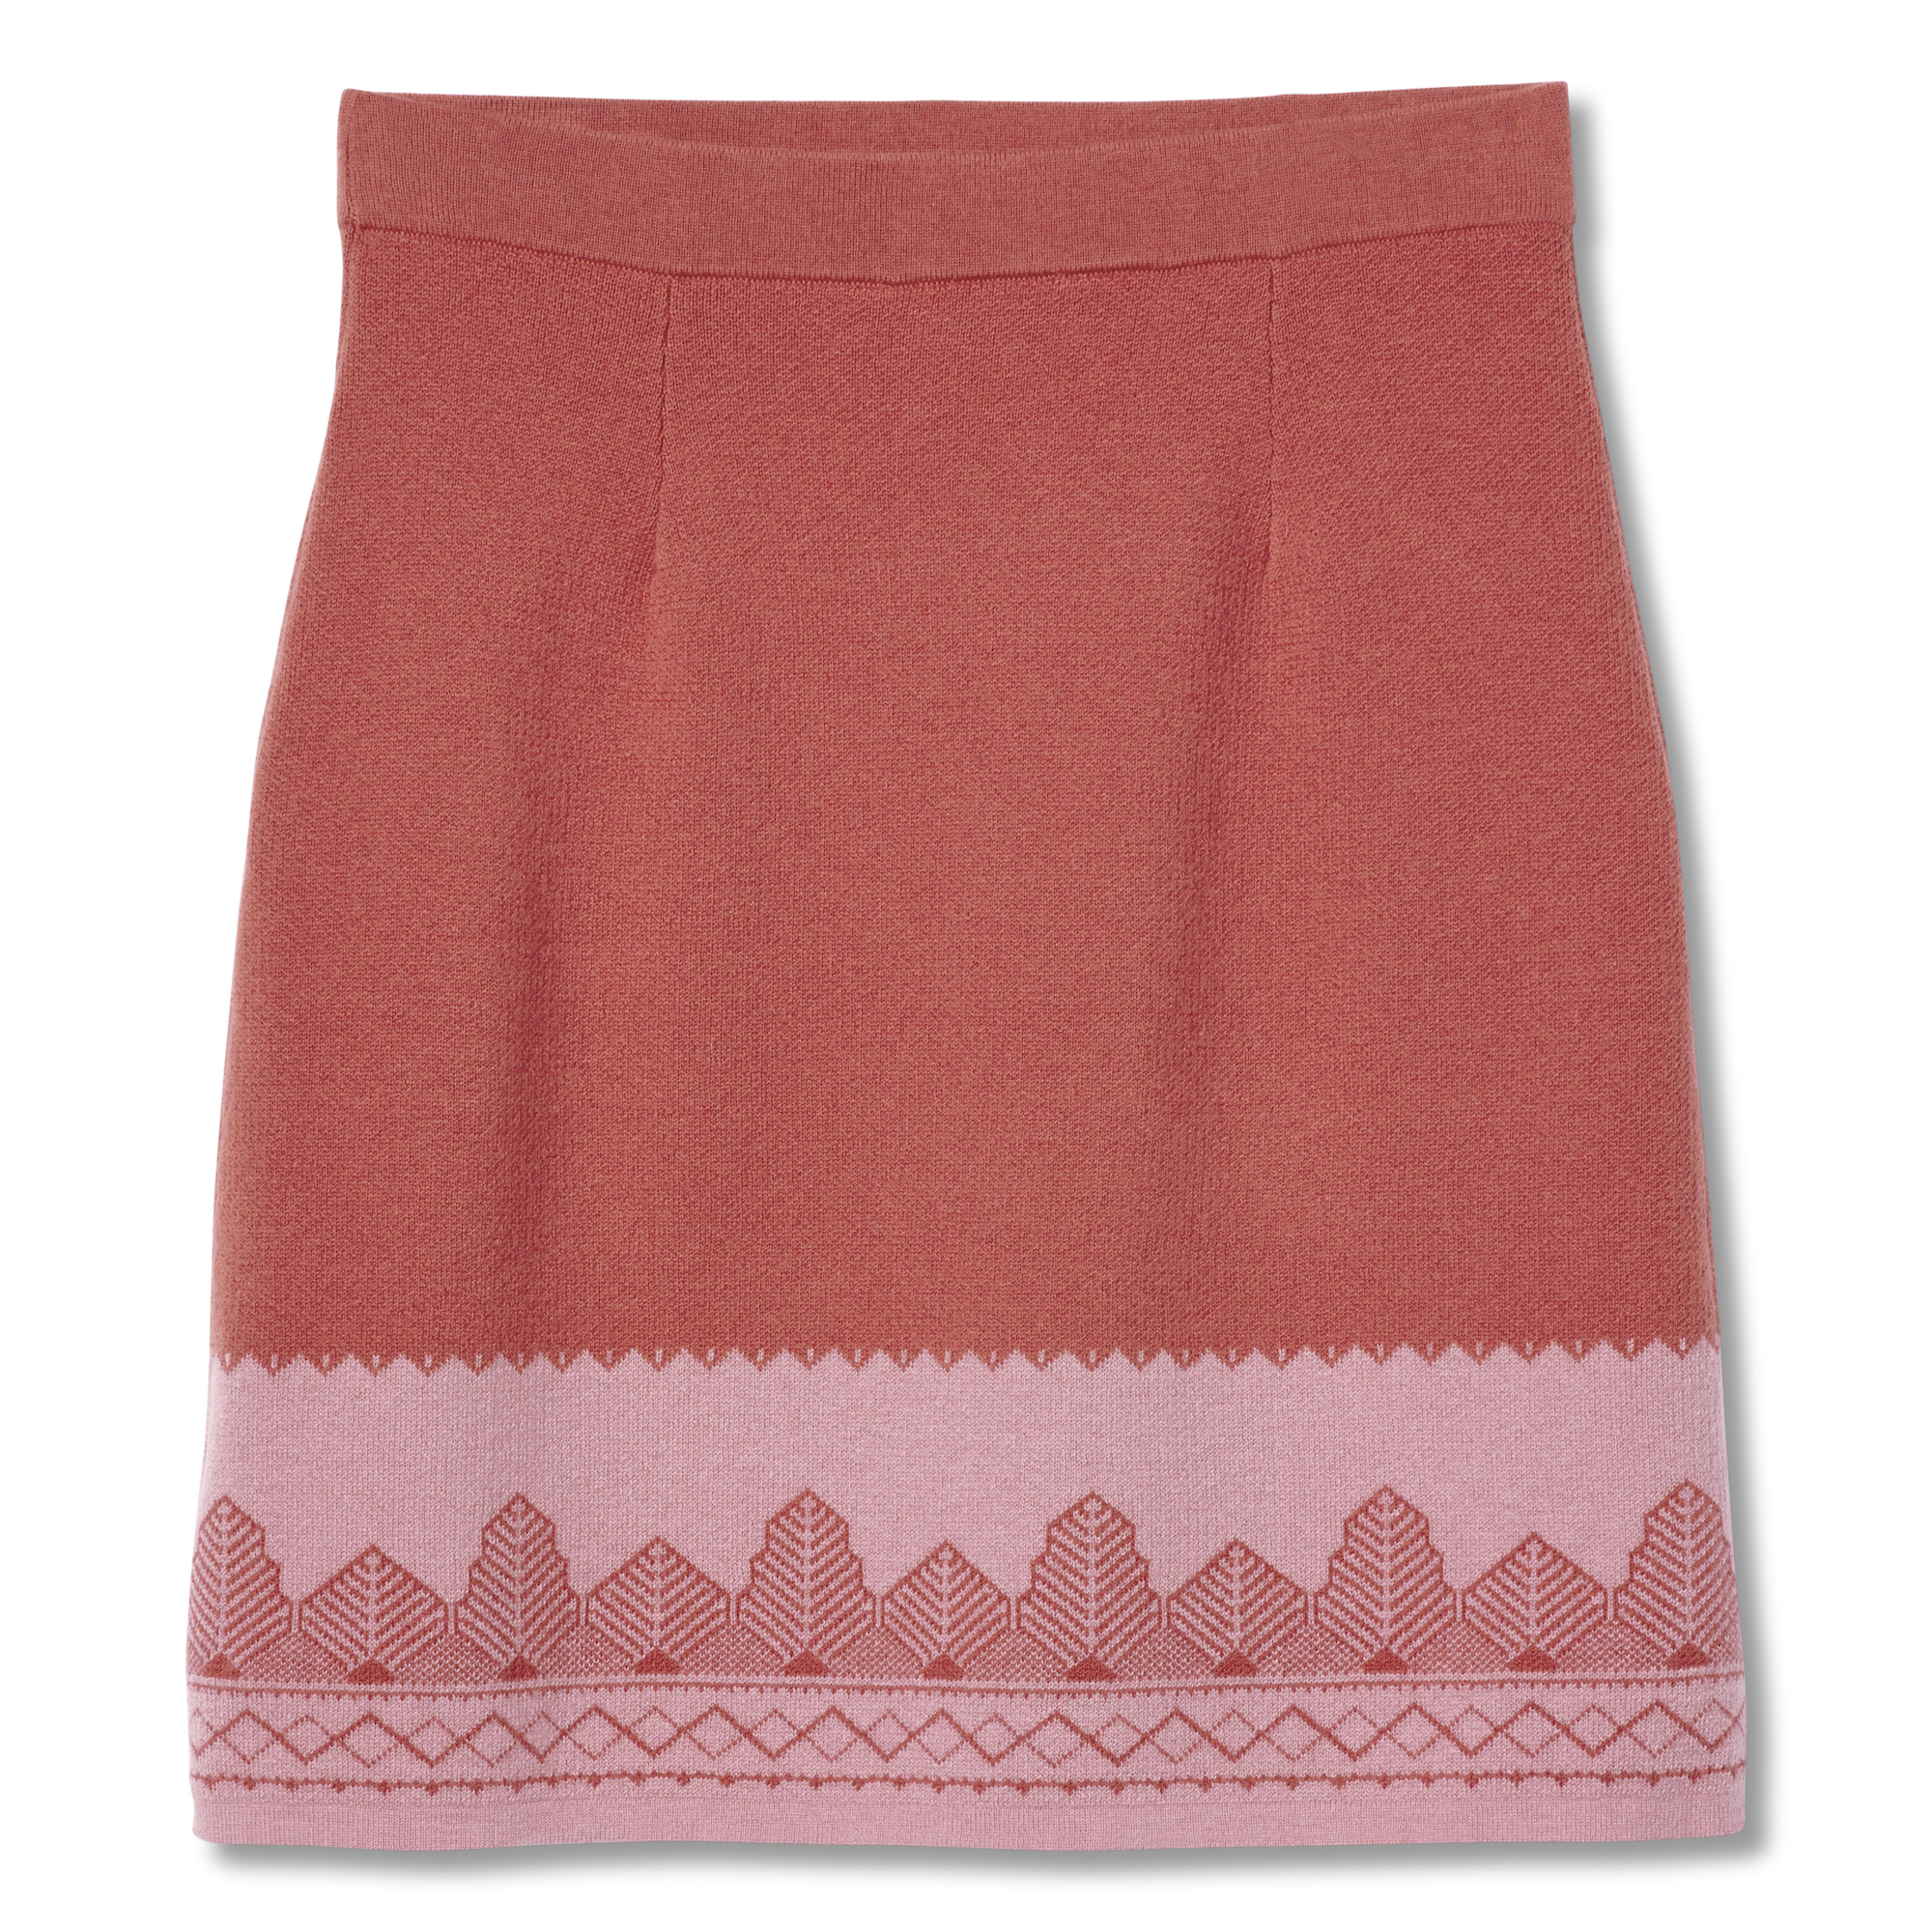 Women's All Season Merino Skirt II | Royal Robbins